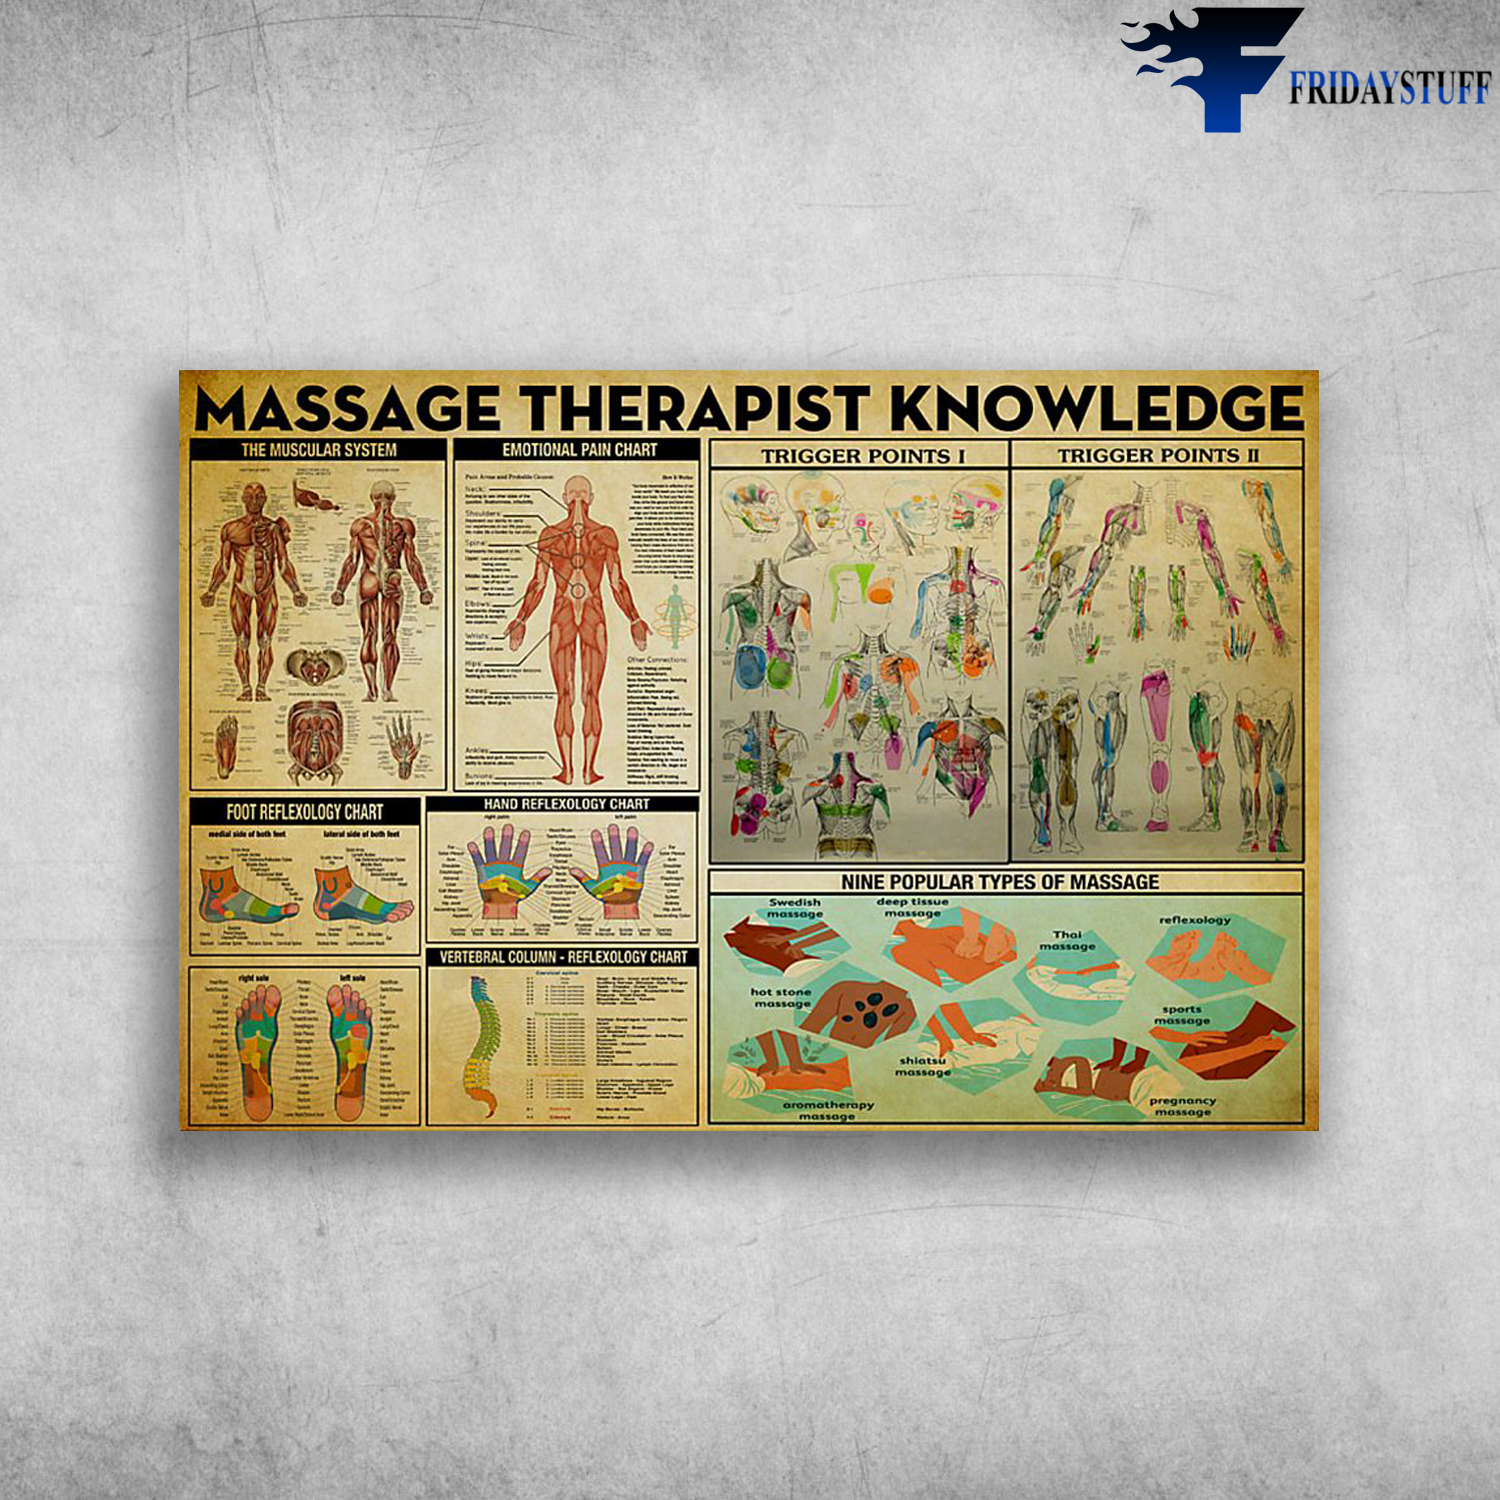 Massage Therapist Knowledge The Muscular System Foot Reflexology Chart